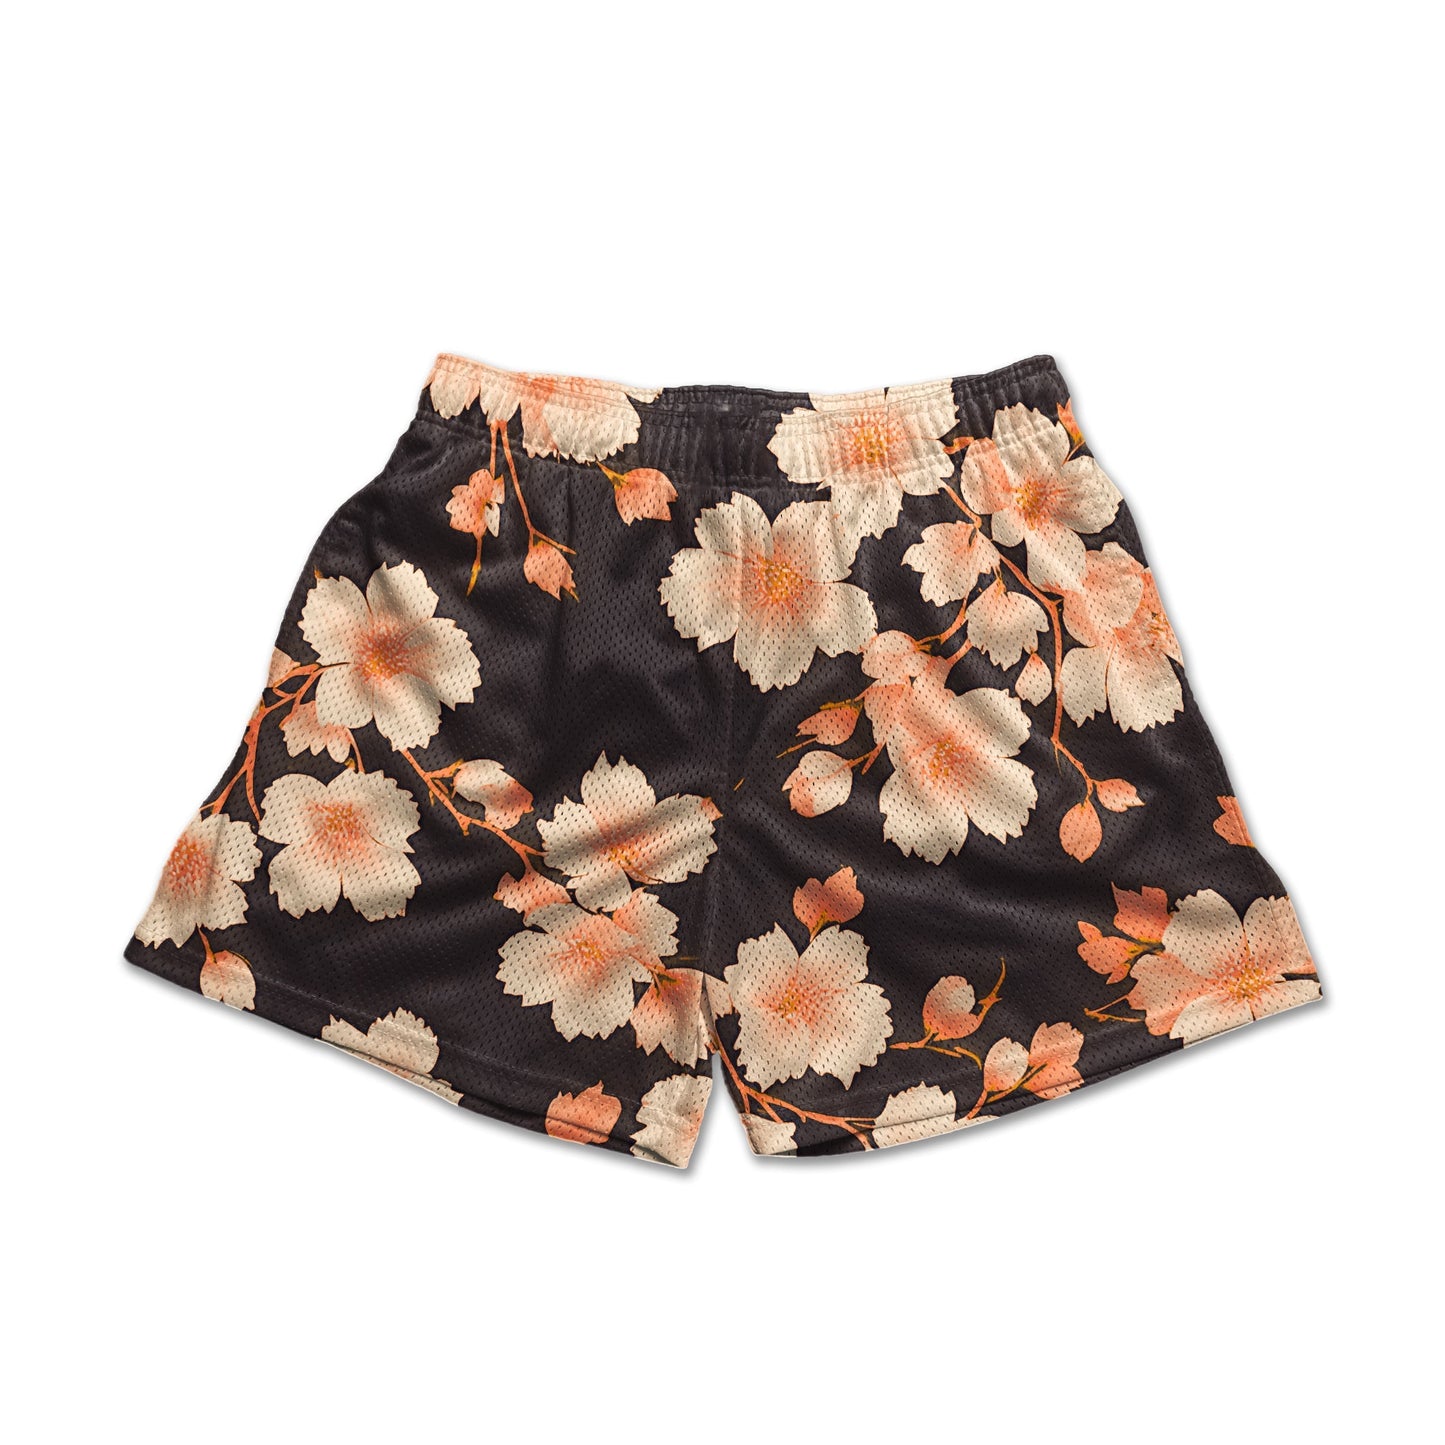 Fashionable personalized flower pattern shorts